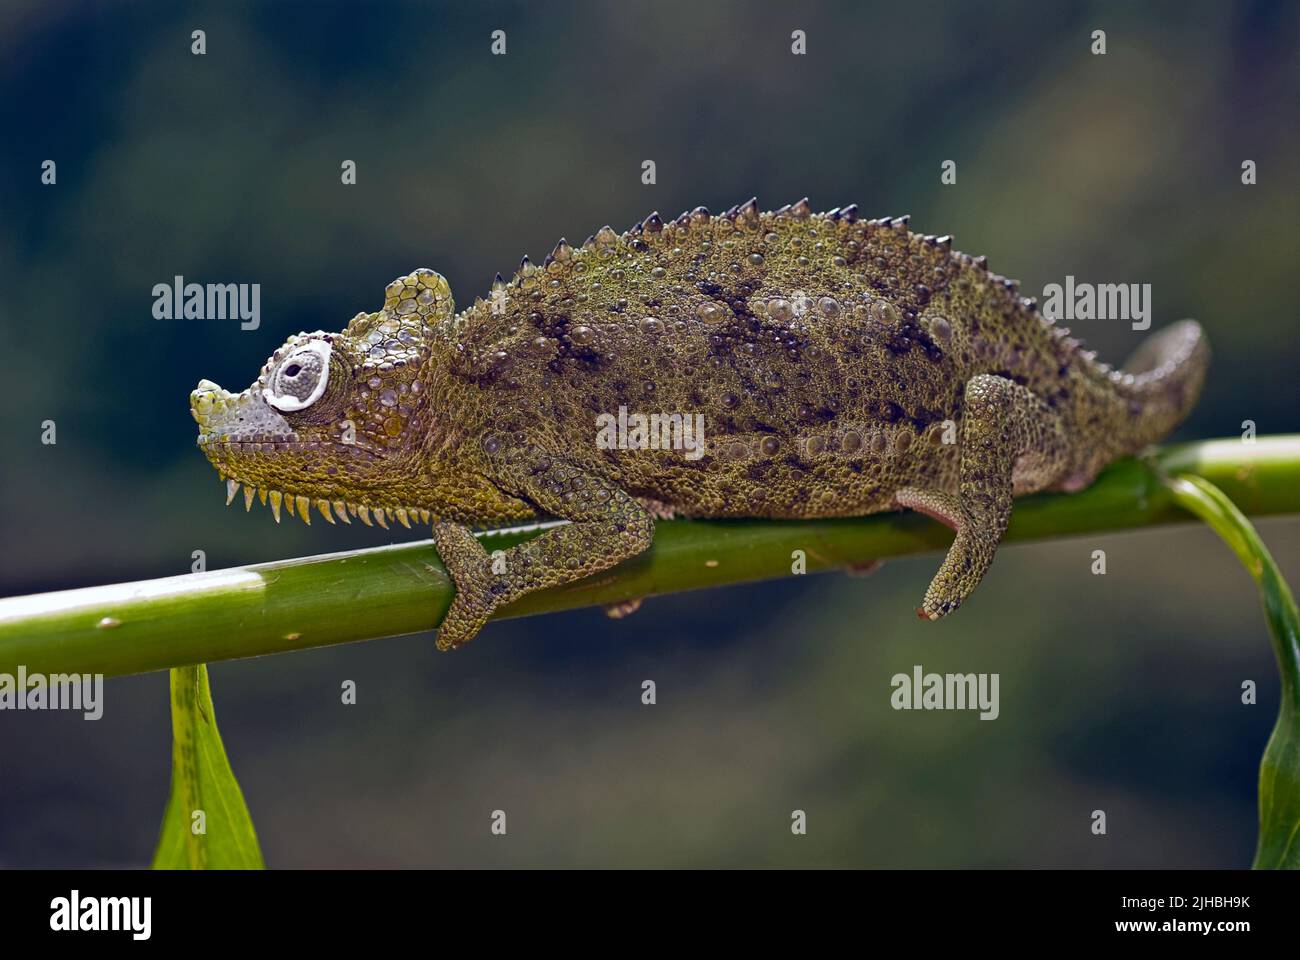 Chameleon de von Höhnel, Chamaeleo hoehnelii, de Kenia. Foto de stock